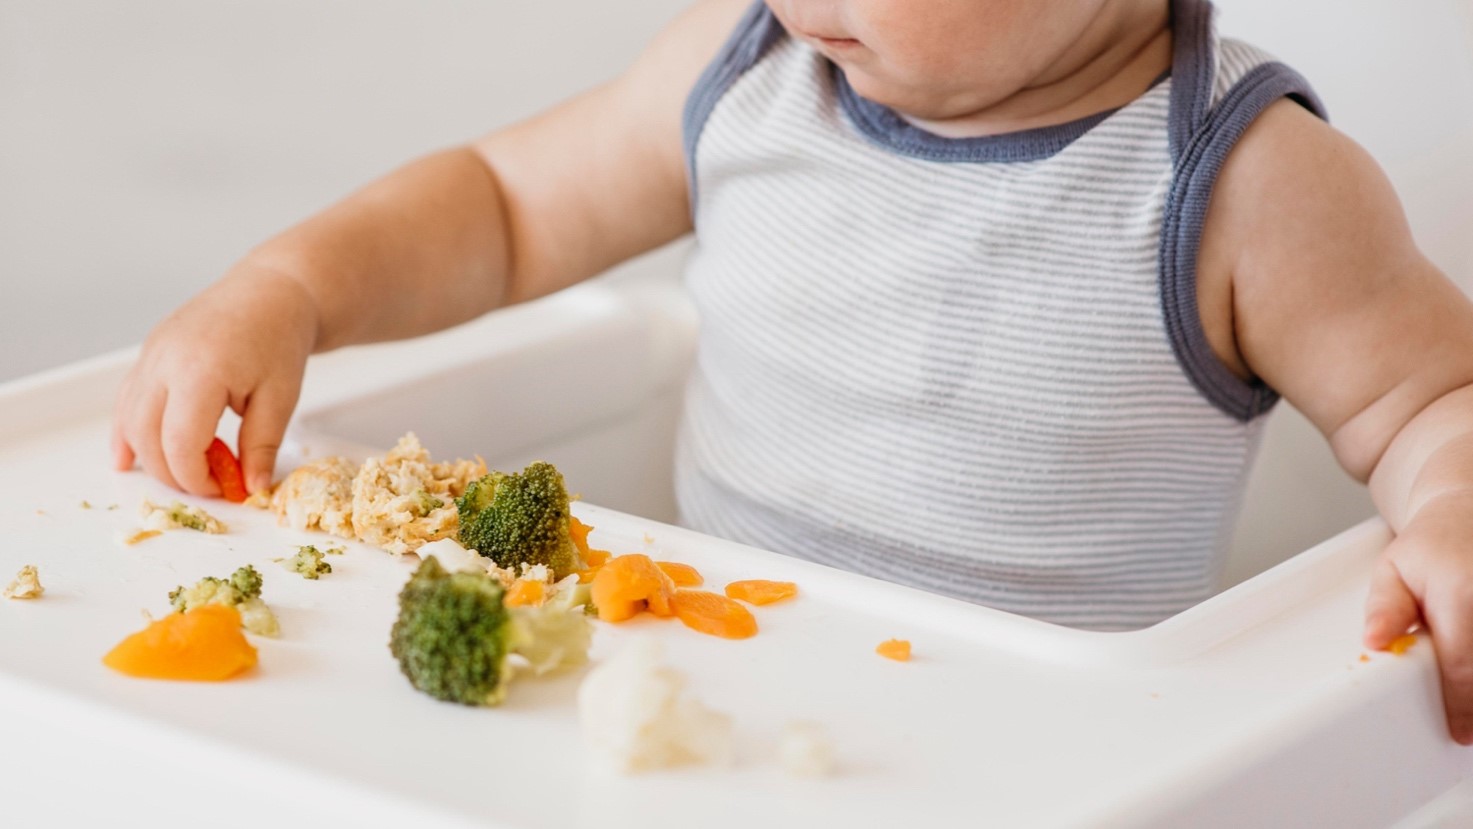 Safe food handling for infants and toddlers